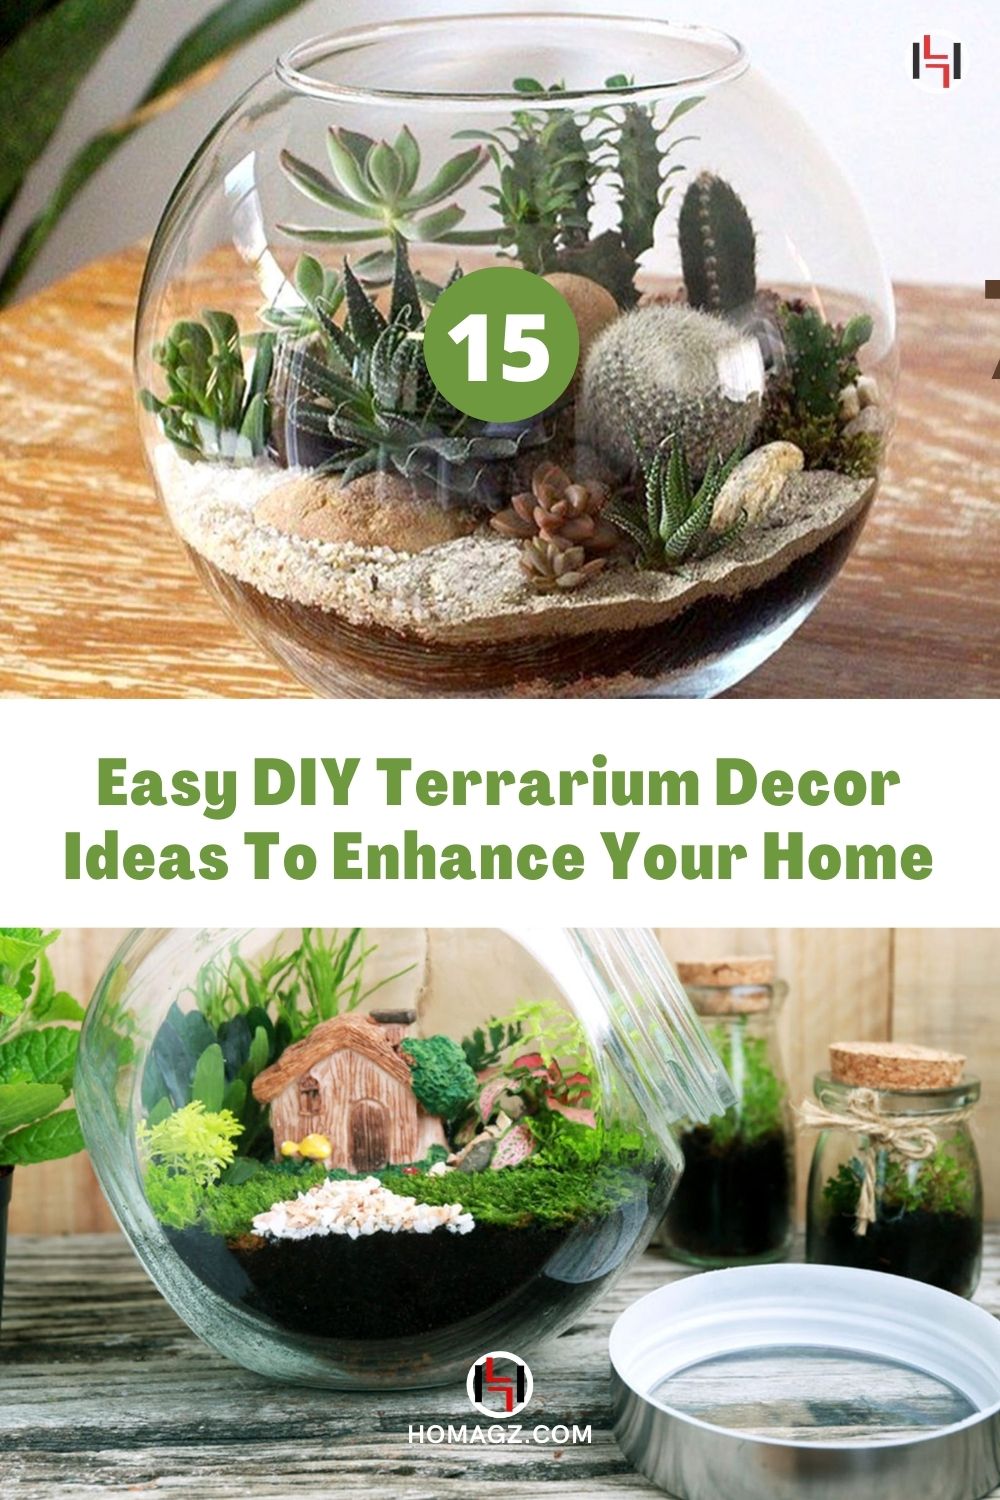 15 Easy DIY Terrarium Decor Ideas To Enhance Your Home (1)